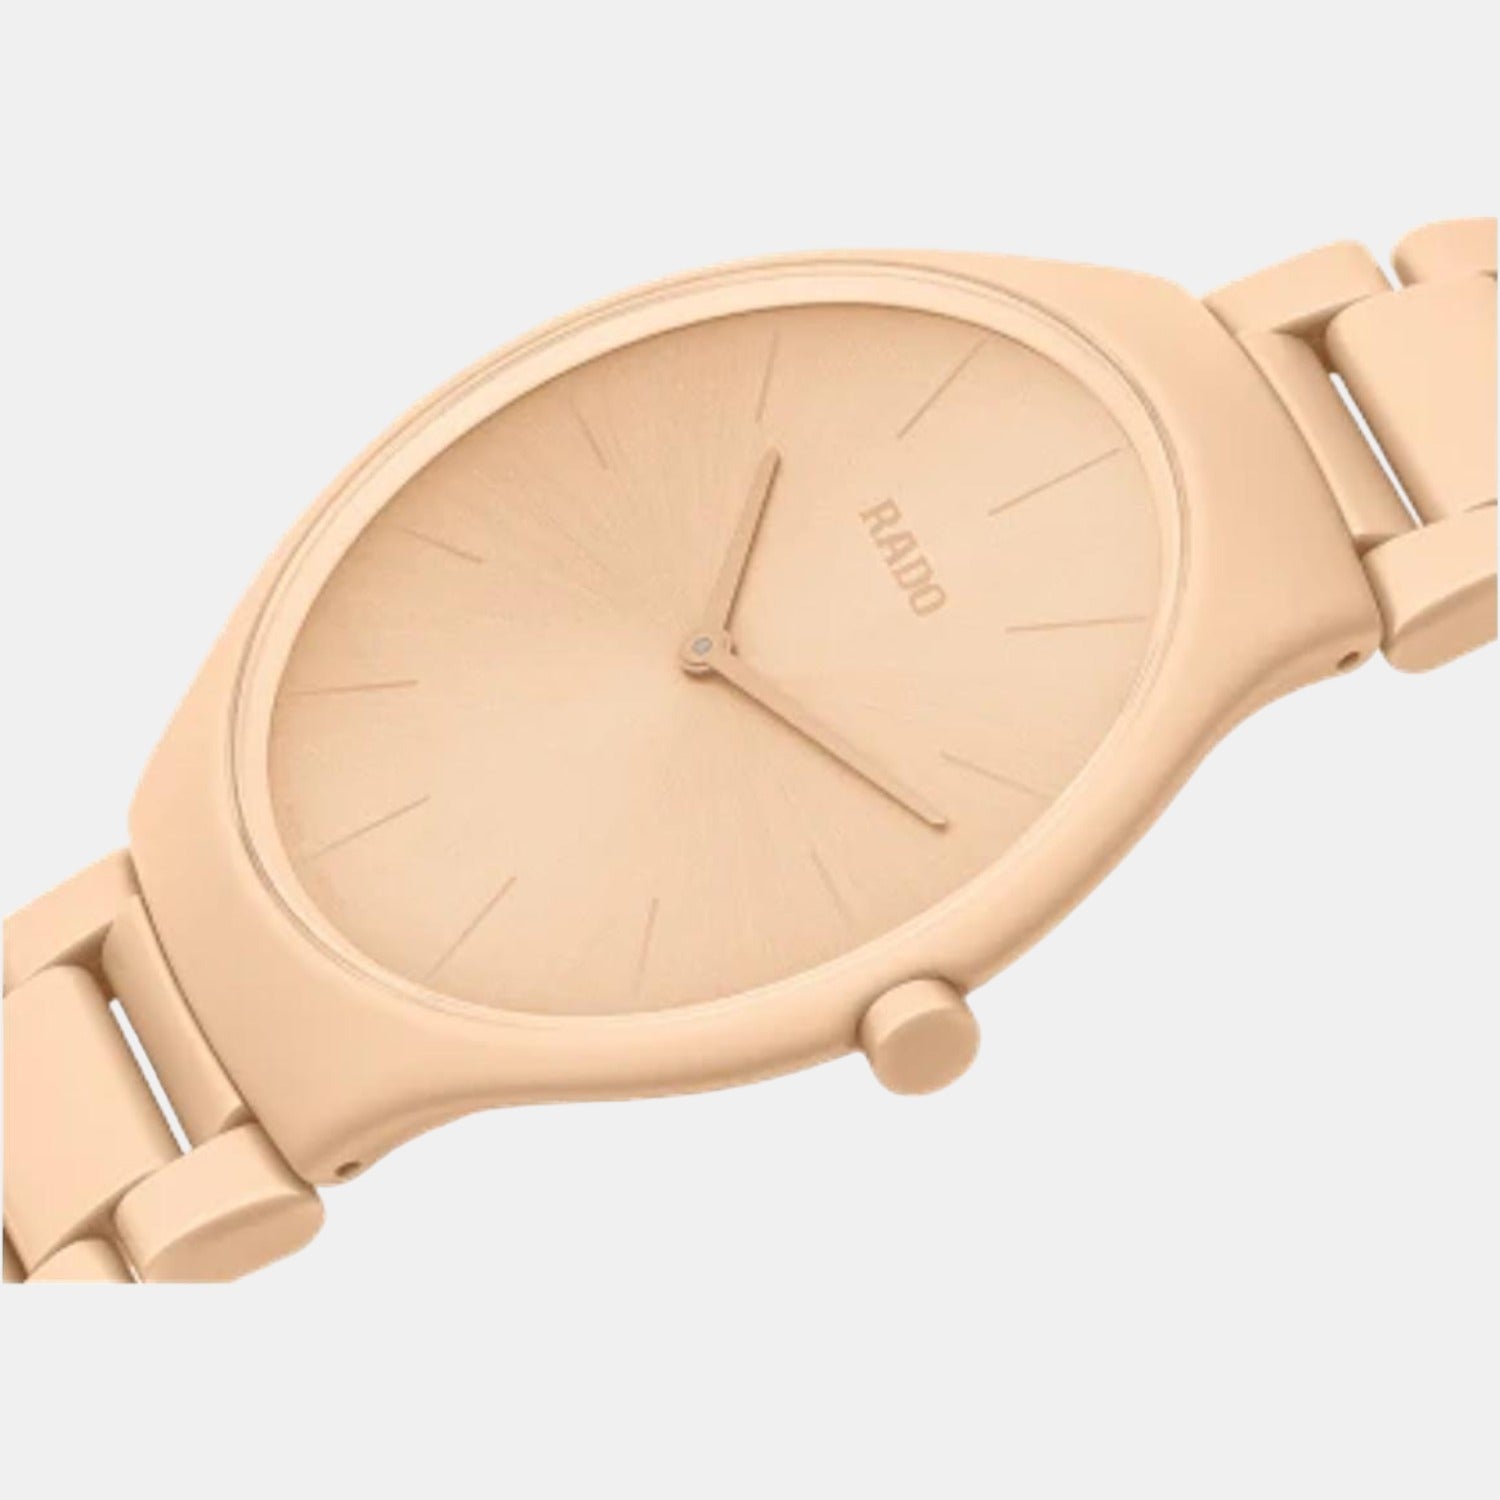 rado-ceramic-pink-analog-unisex-watch-r27097672